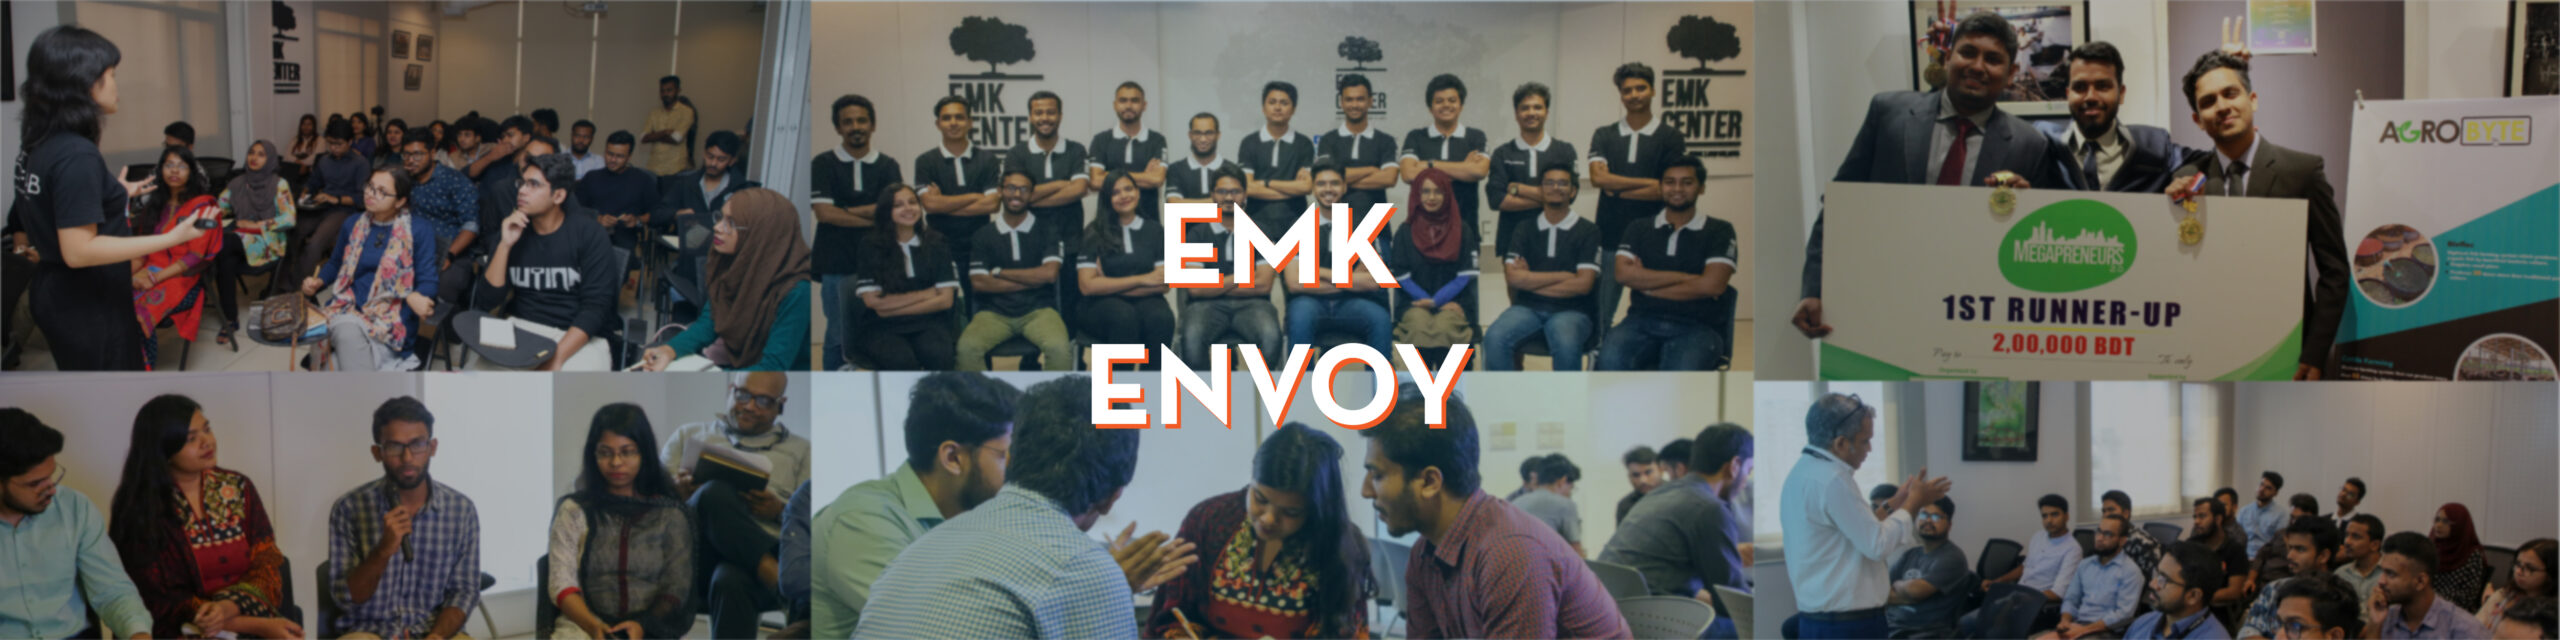 EMK Envoy